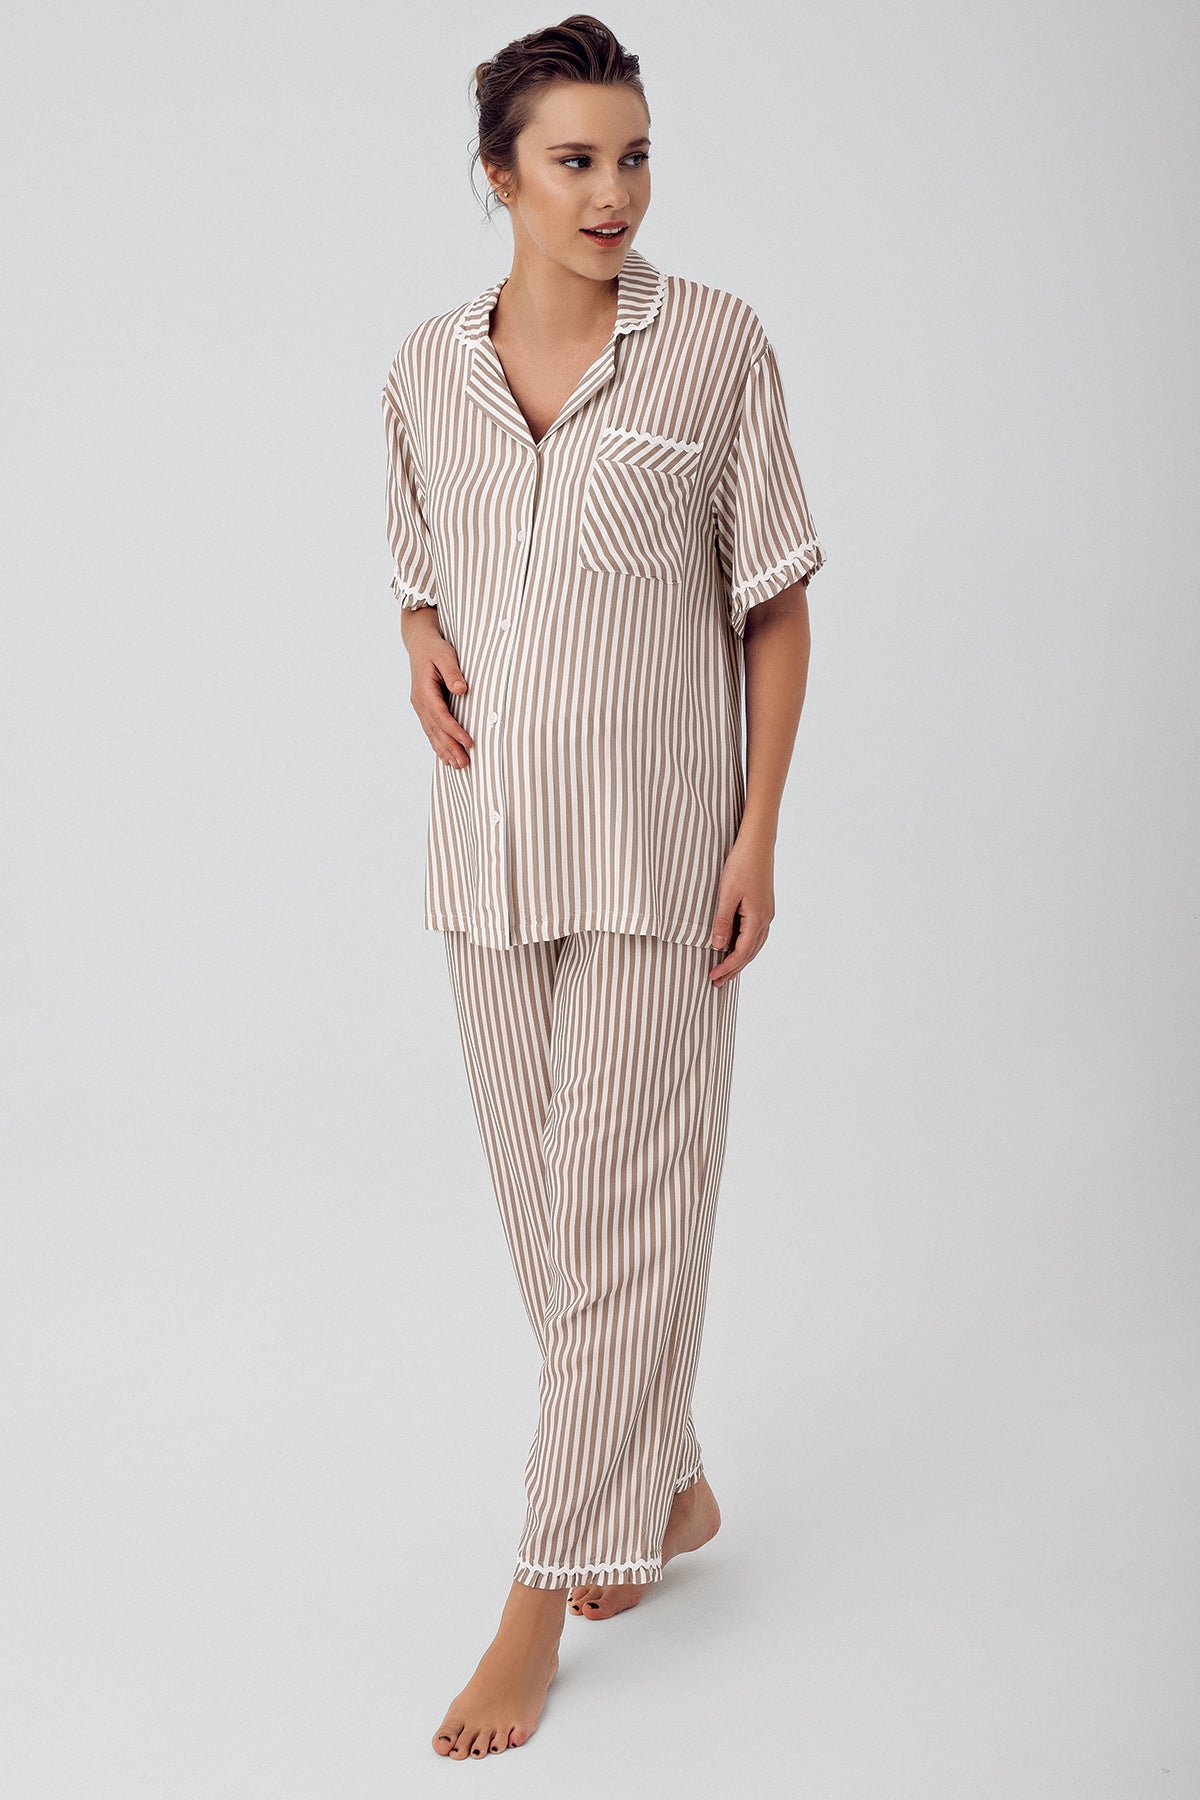 Shopymommy 16203 Striped Maternity & Nursing Pajamas Beige